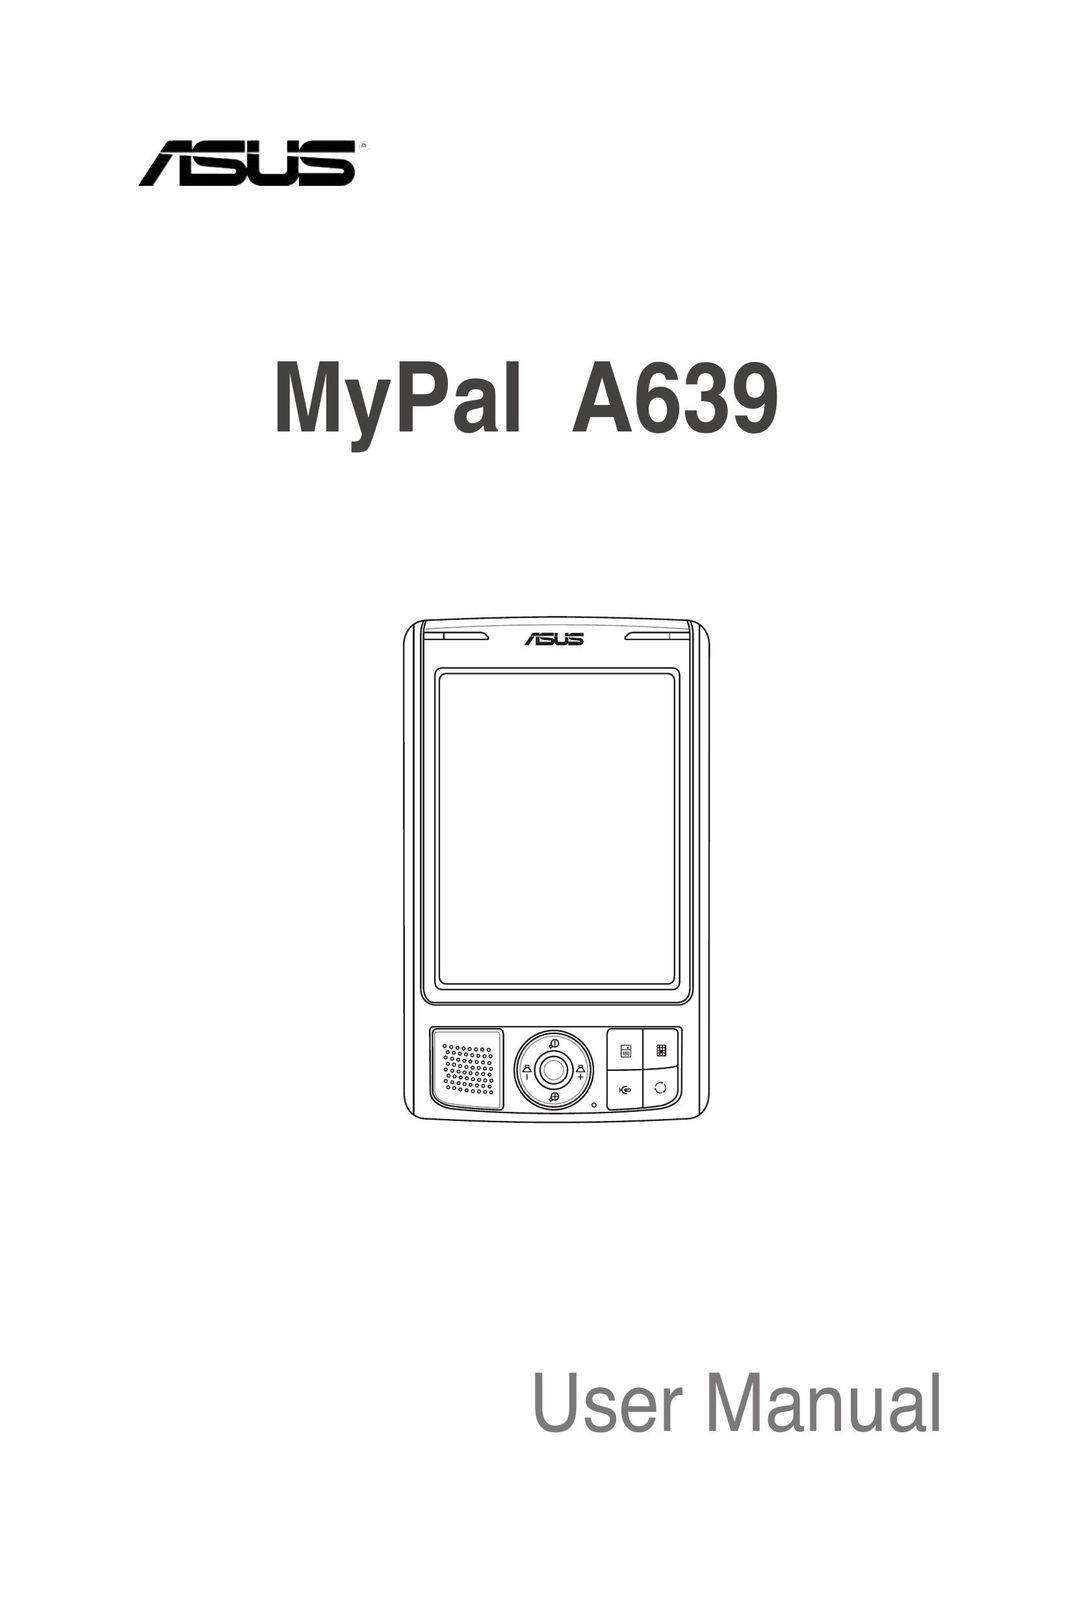 Asus A639 PDAs & Smartphones User Manual